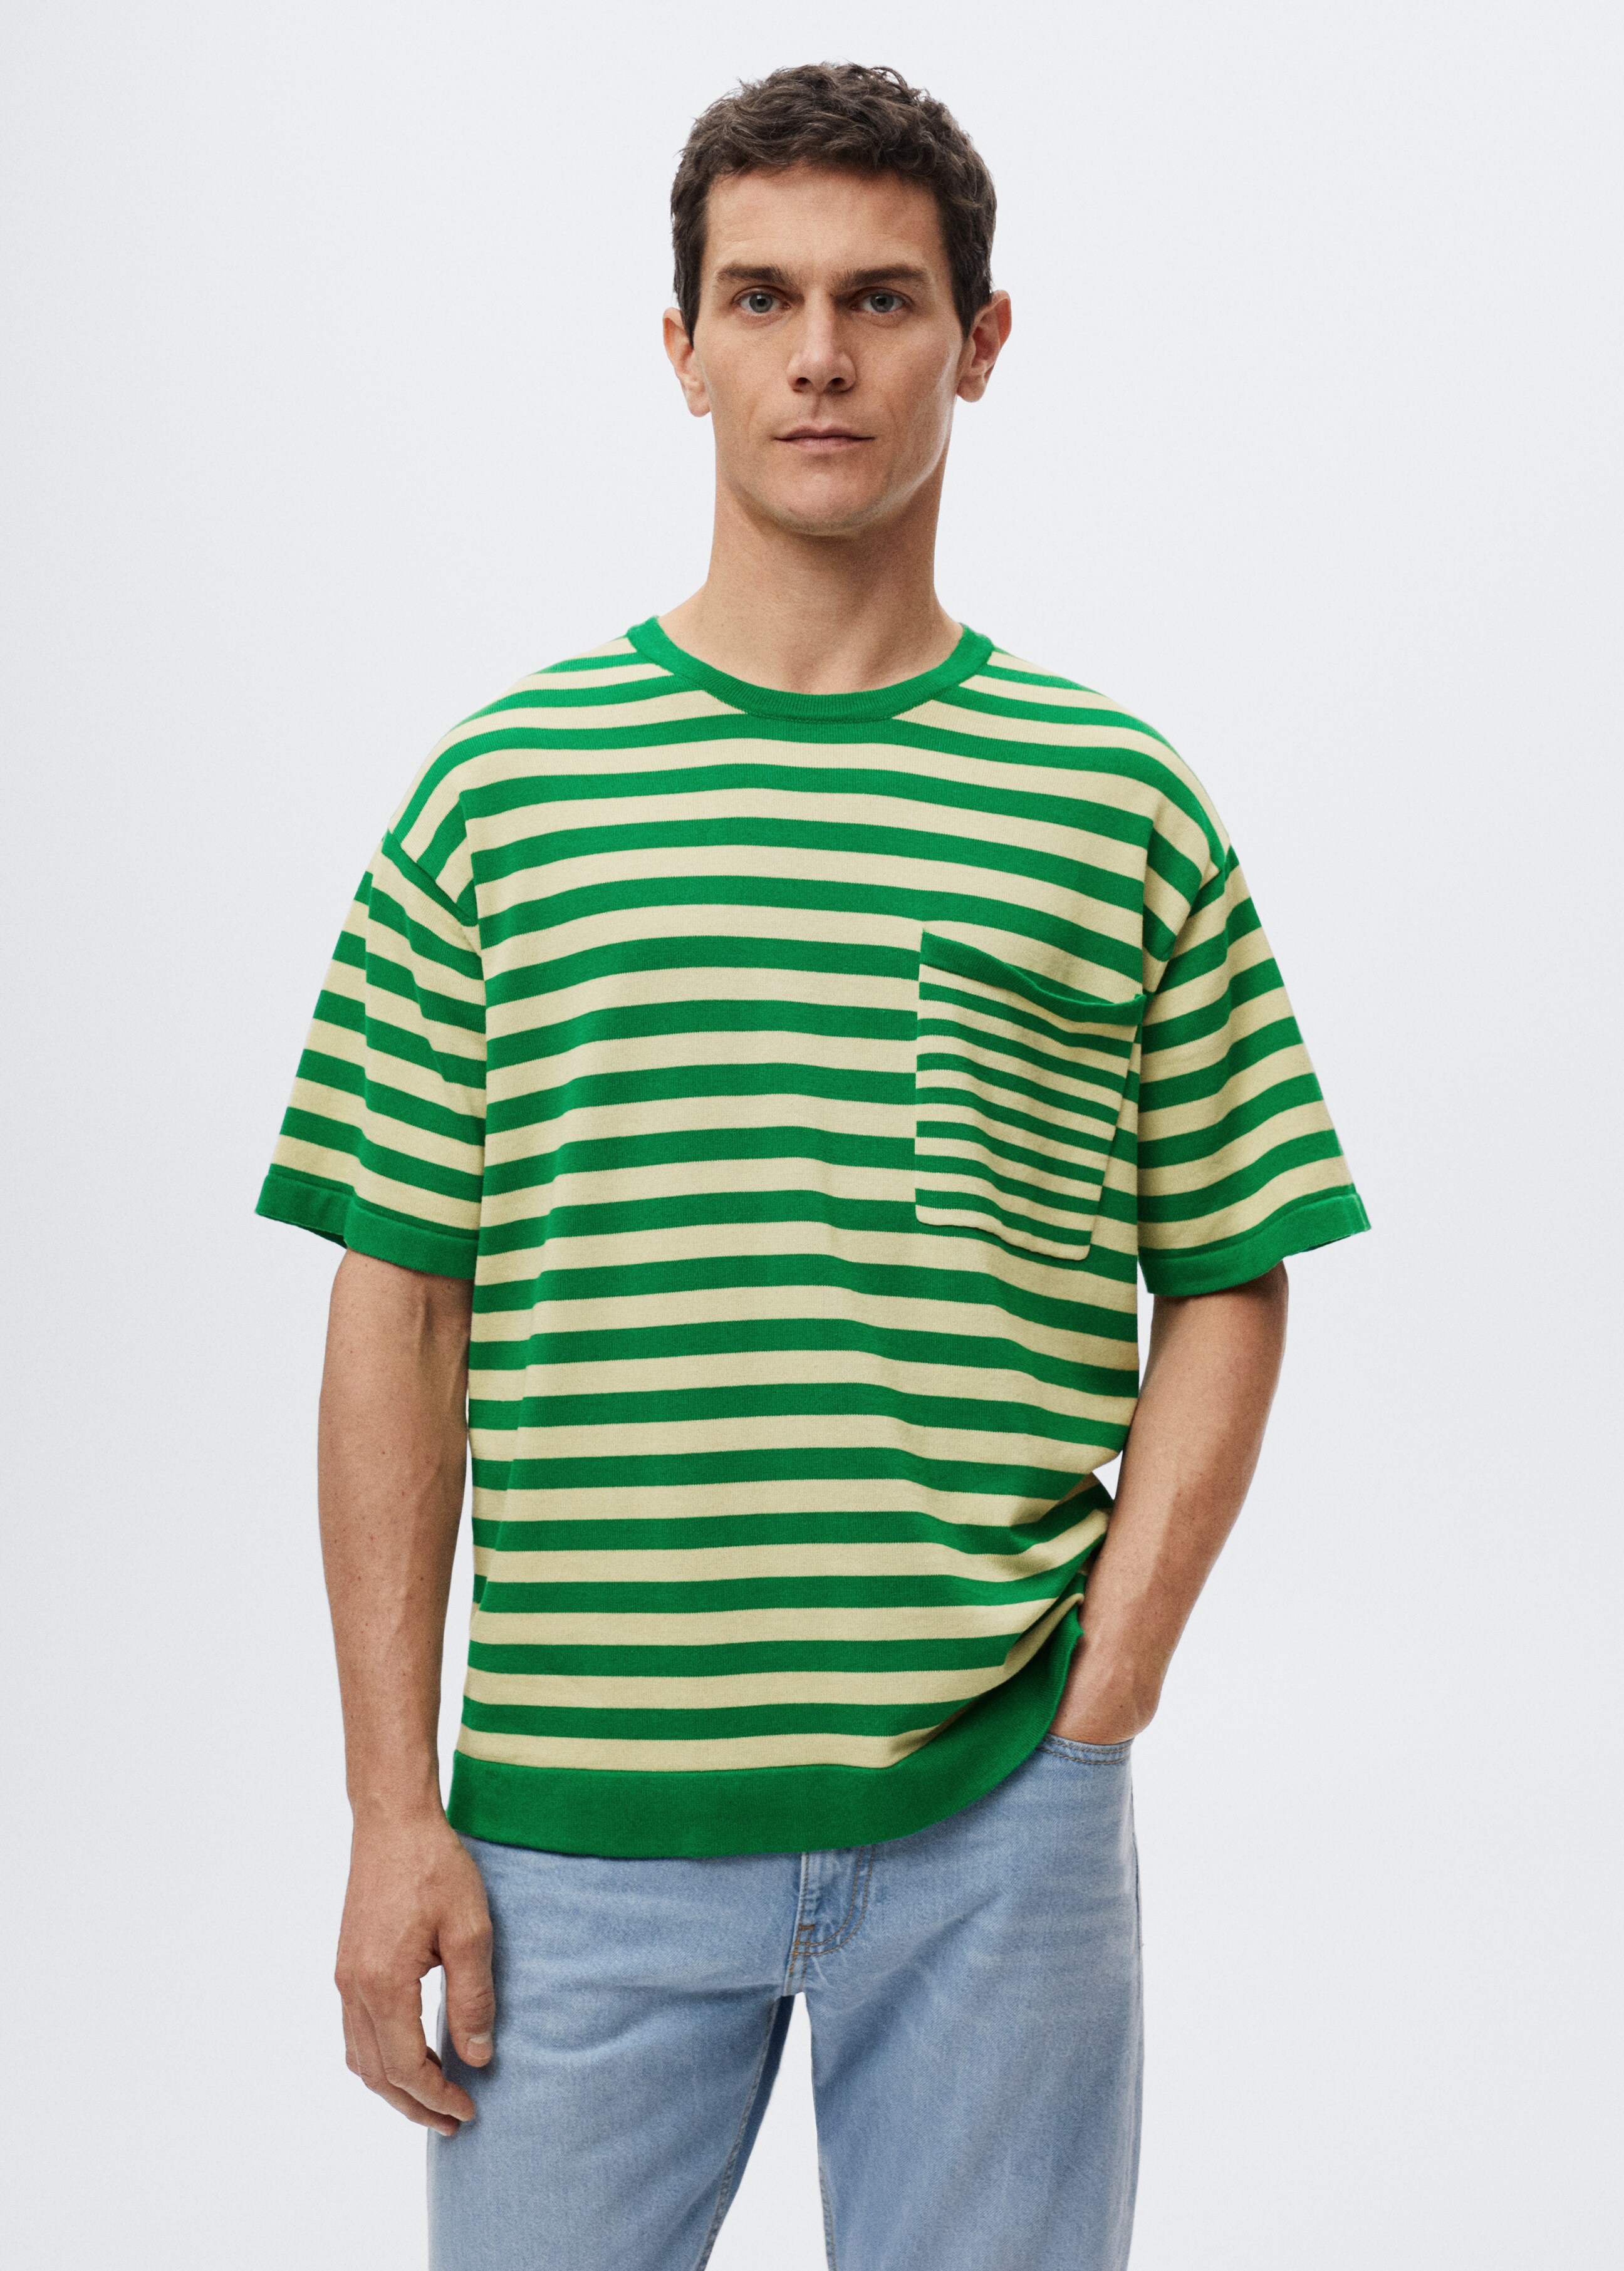 Striped jersey T-shirt - Medium plane